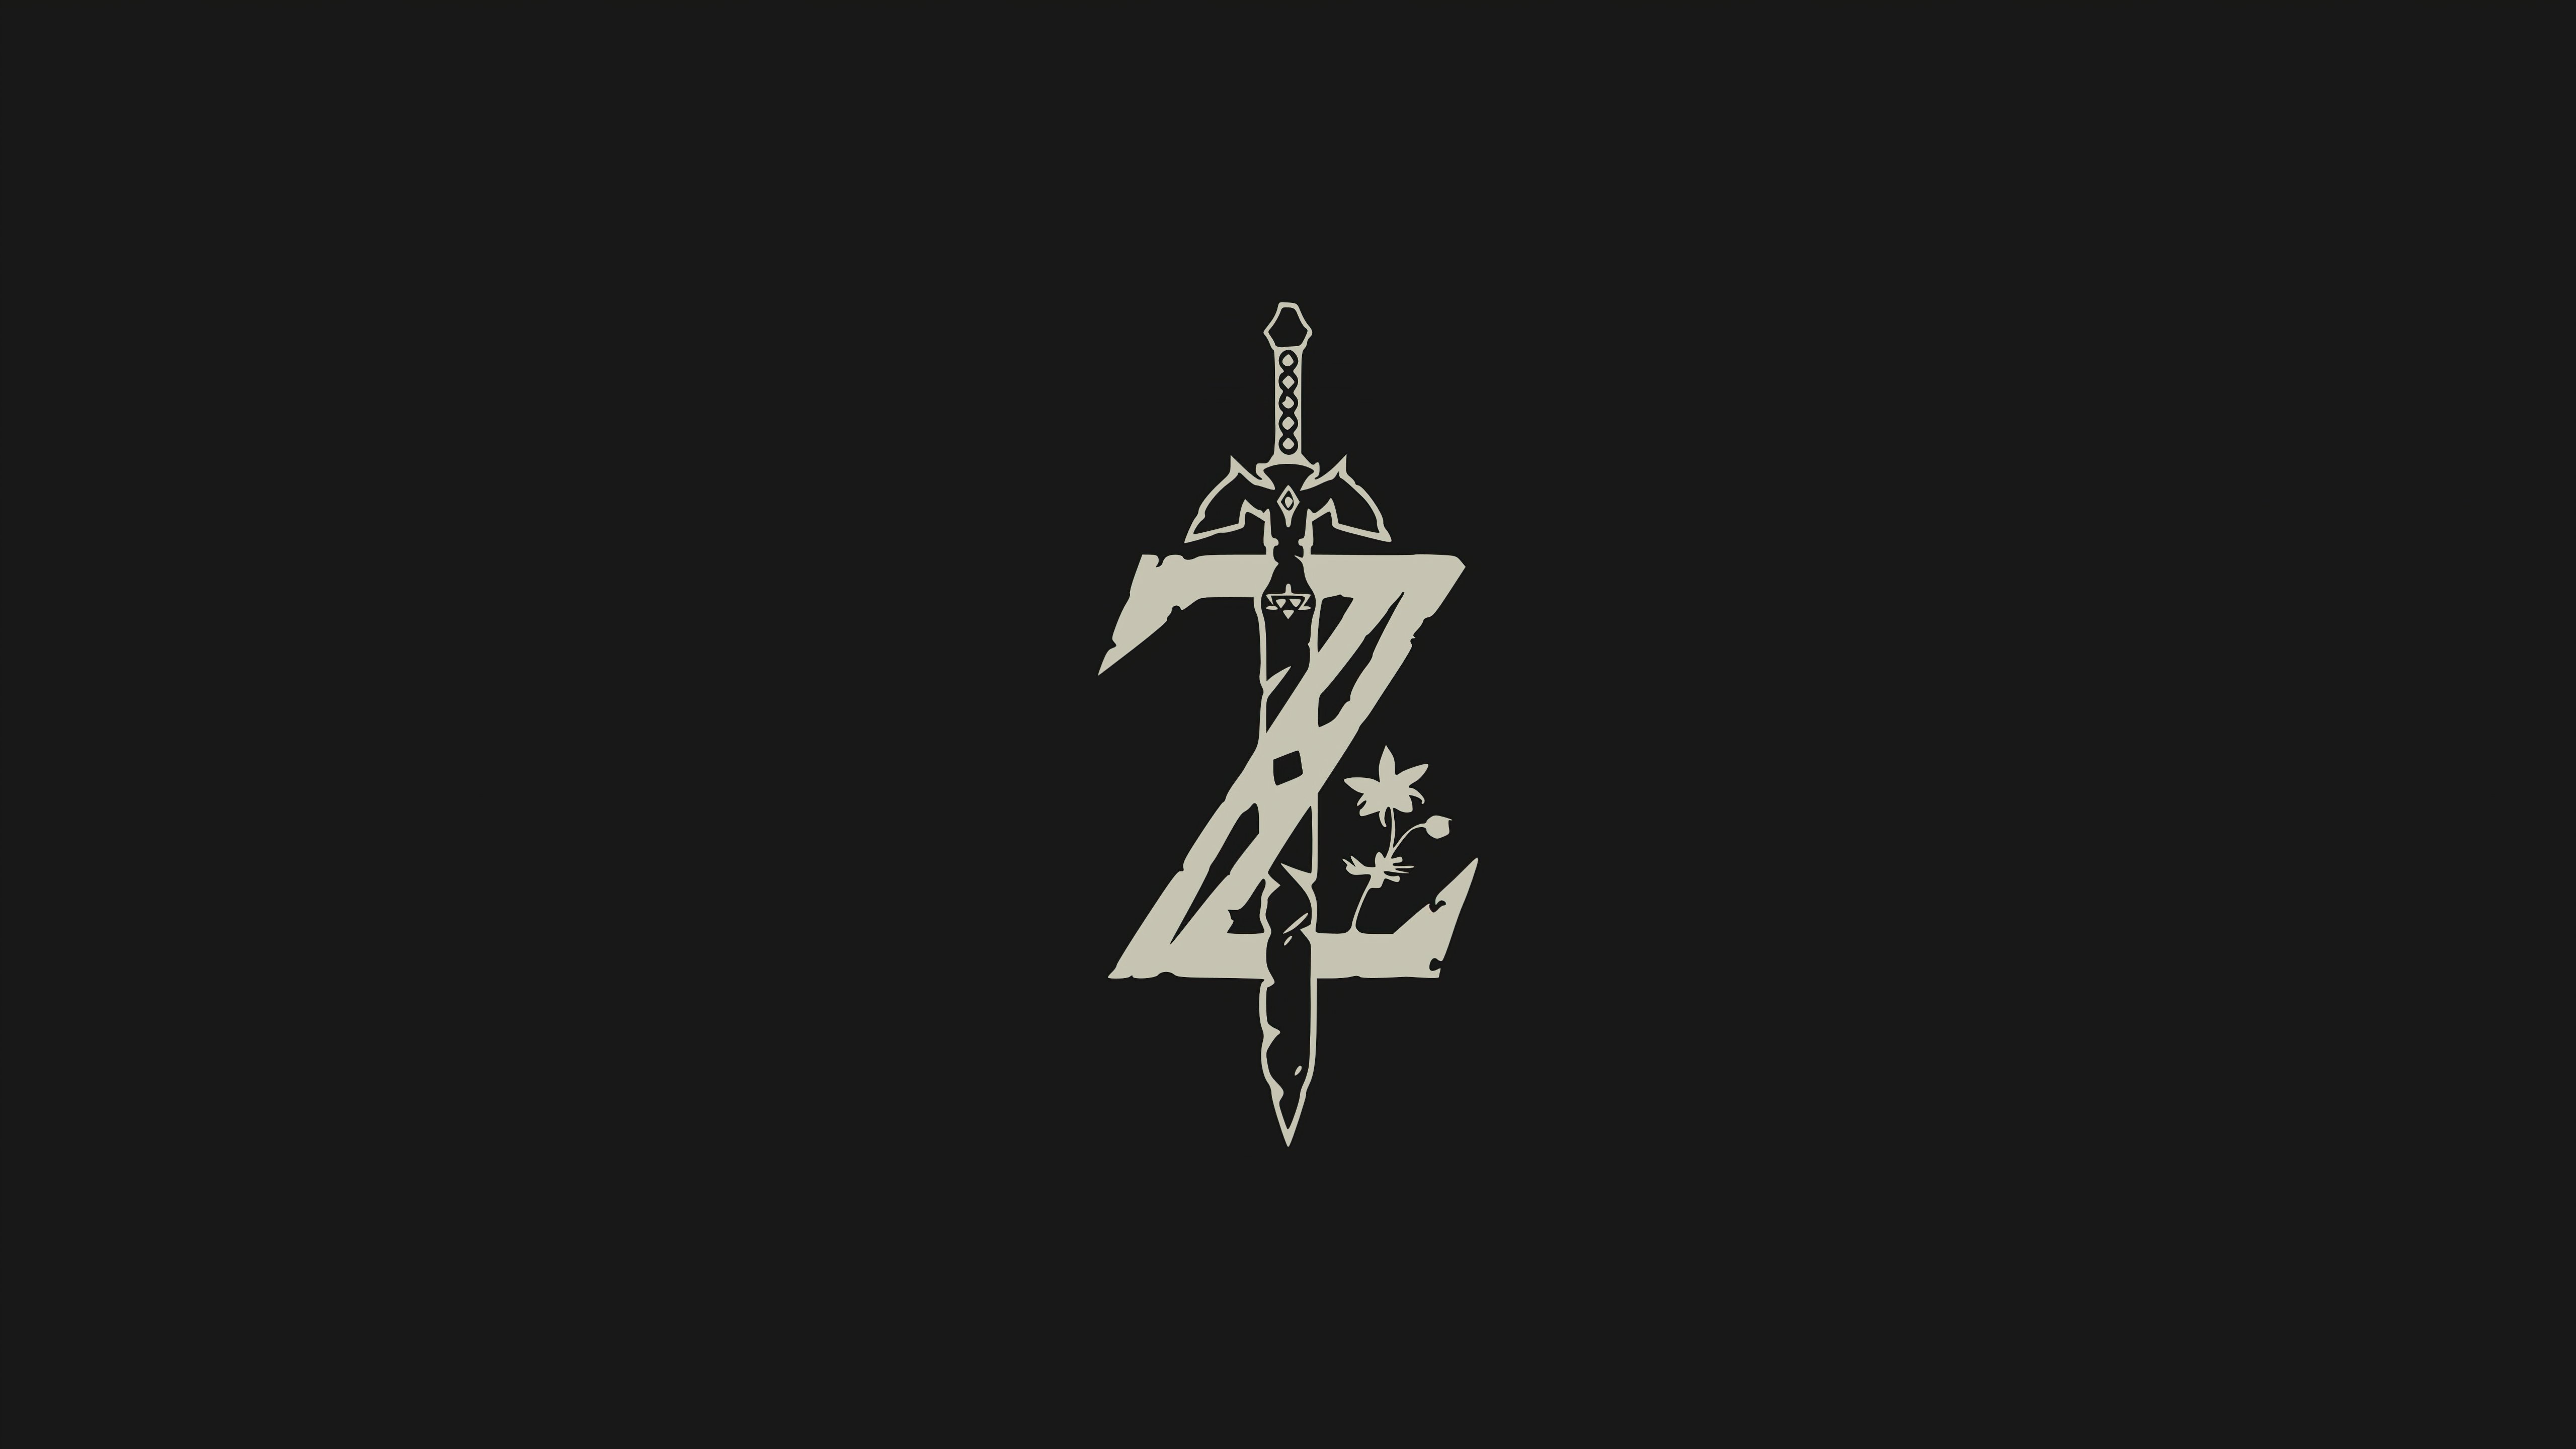 The Legend Of Zelda Minimal Logo 4k, HD Games, 4k Wallpaper, Image, Background, Photo and Picture